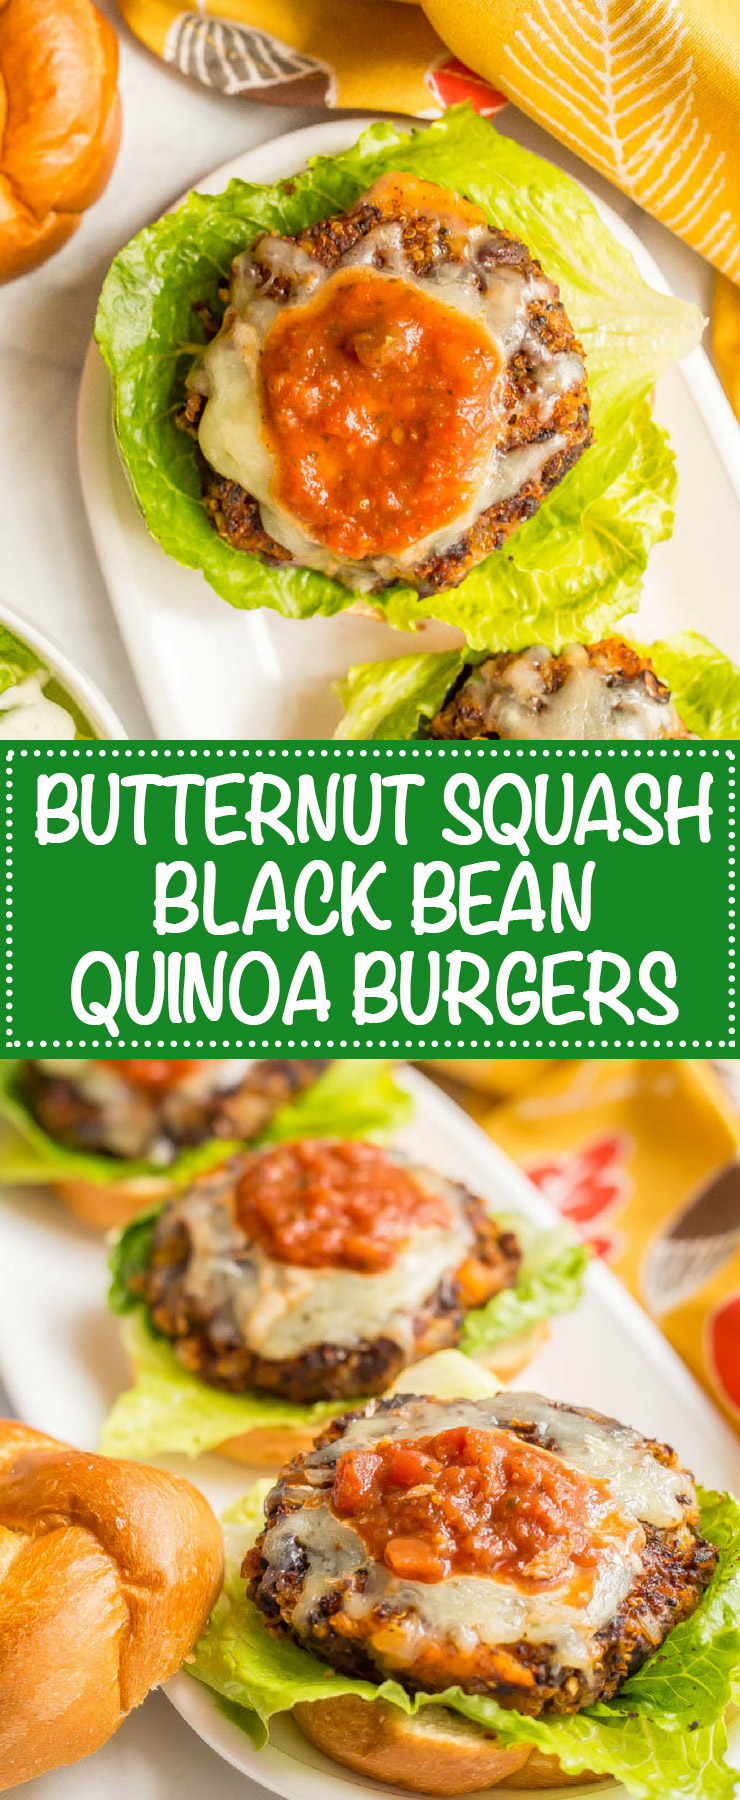 Butternut squash black bean quinoa burgers are a hearty vegan burger with tex-mex spices and big flavors! #veggieburger #blackbeanburger #vegetarian | www.familyfoodonthetable.com